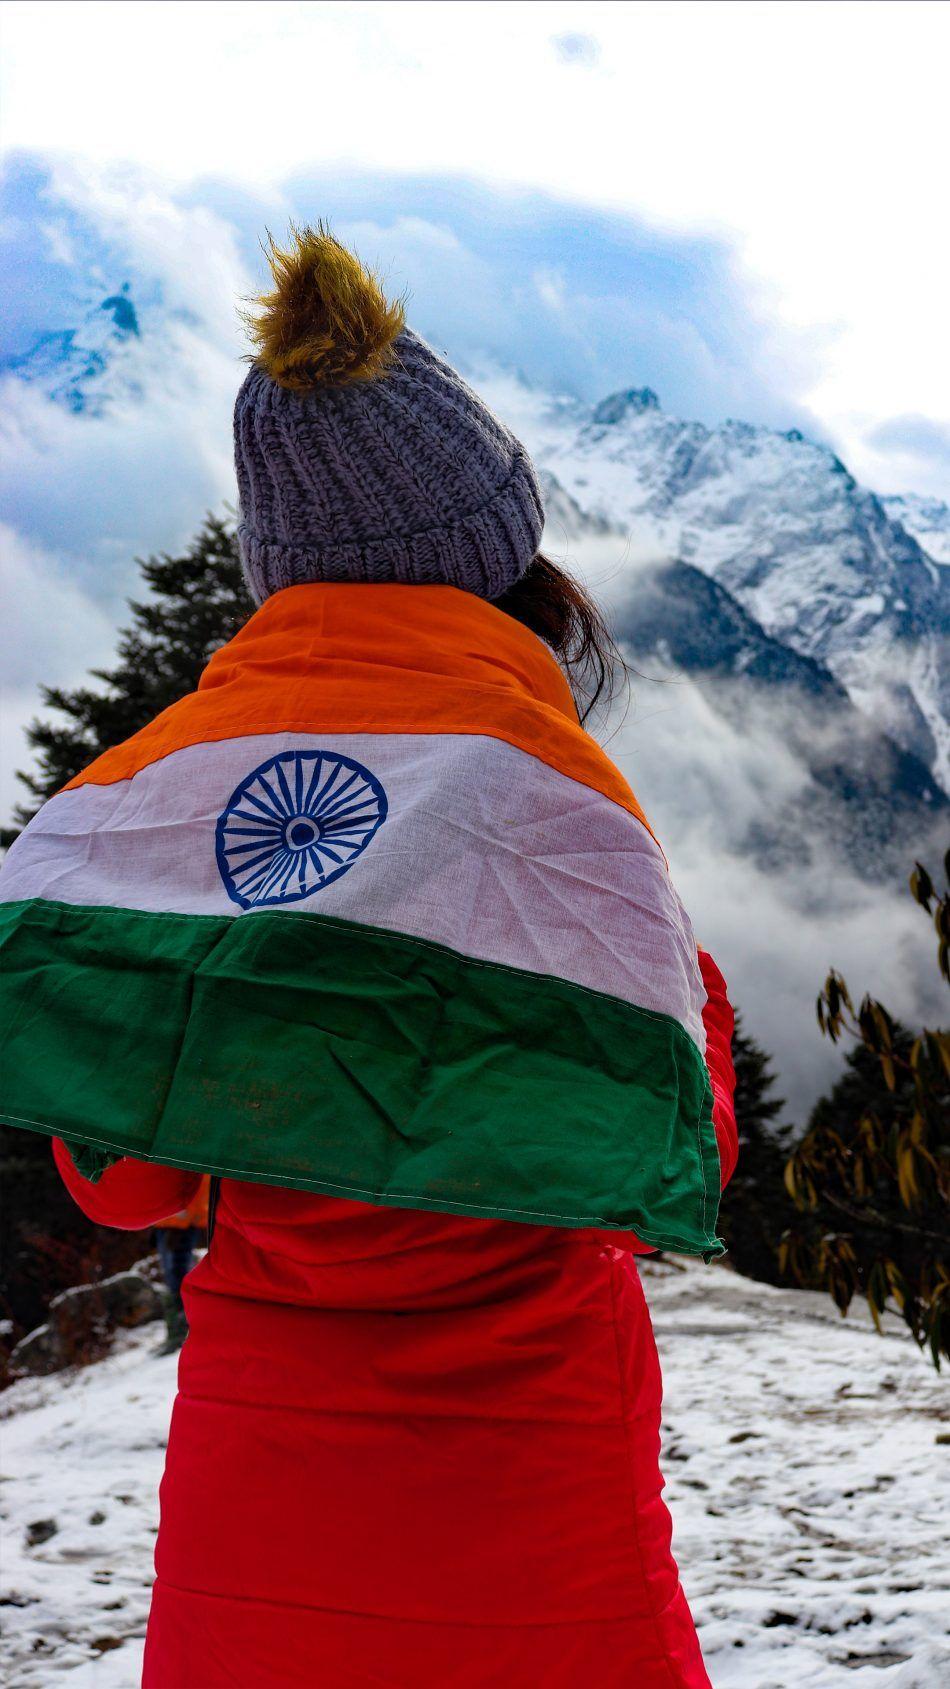 Girl Indian Flag Snow Mountains. Indian flag